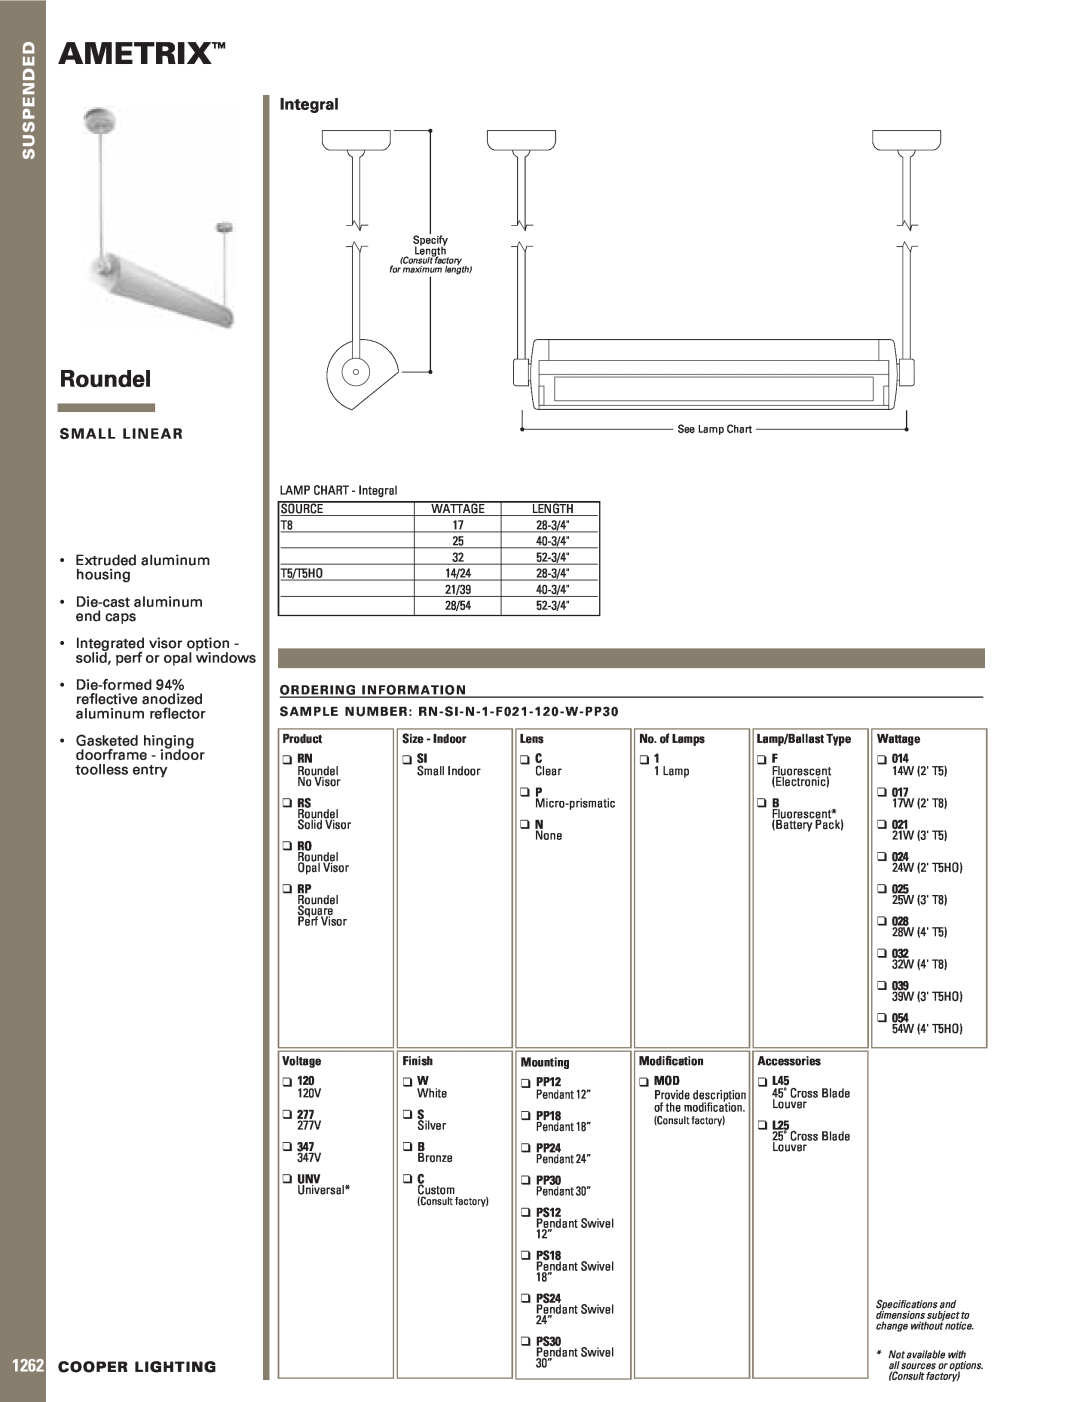 Cooper Lighting Suspended Lighting specifications Ametrix, Roundel, 1262, Integral, S M A L L L I N E A R, Cooper Lighting 